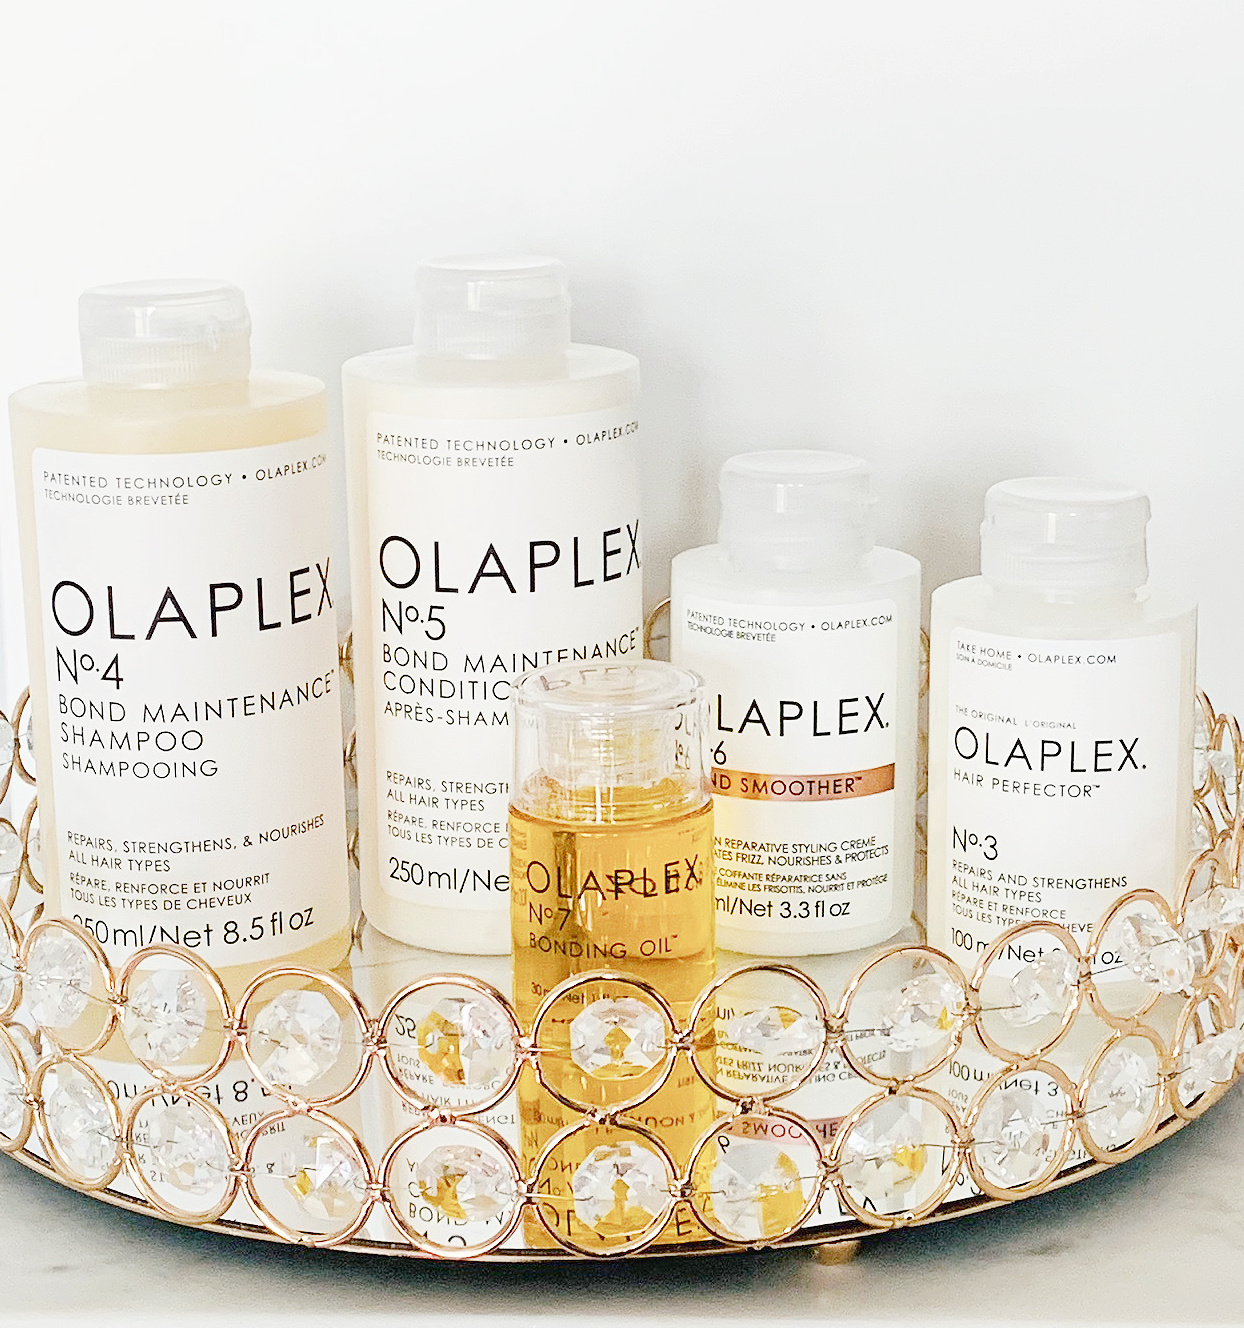 Olaplex hair results. Scentsational Olaplex discount